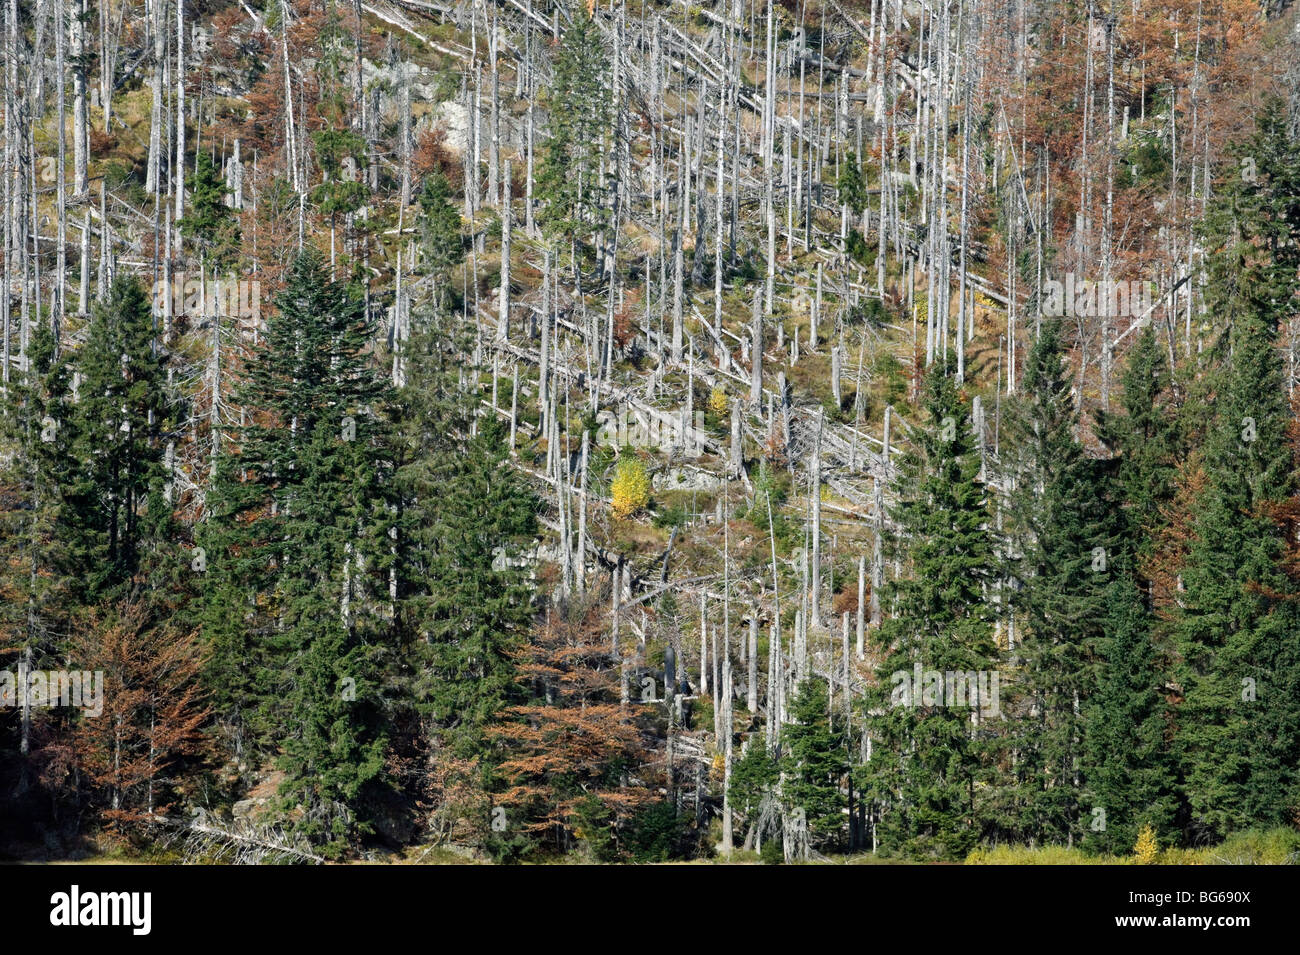 Germany, Bayerischerwald, diseased conifers Stock Photo